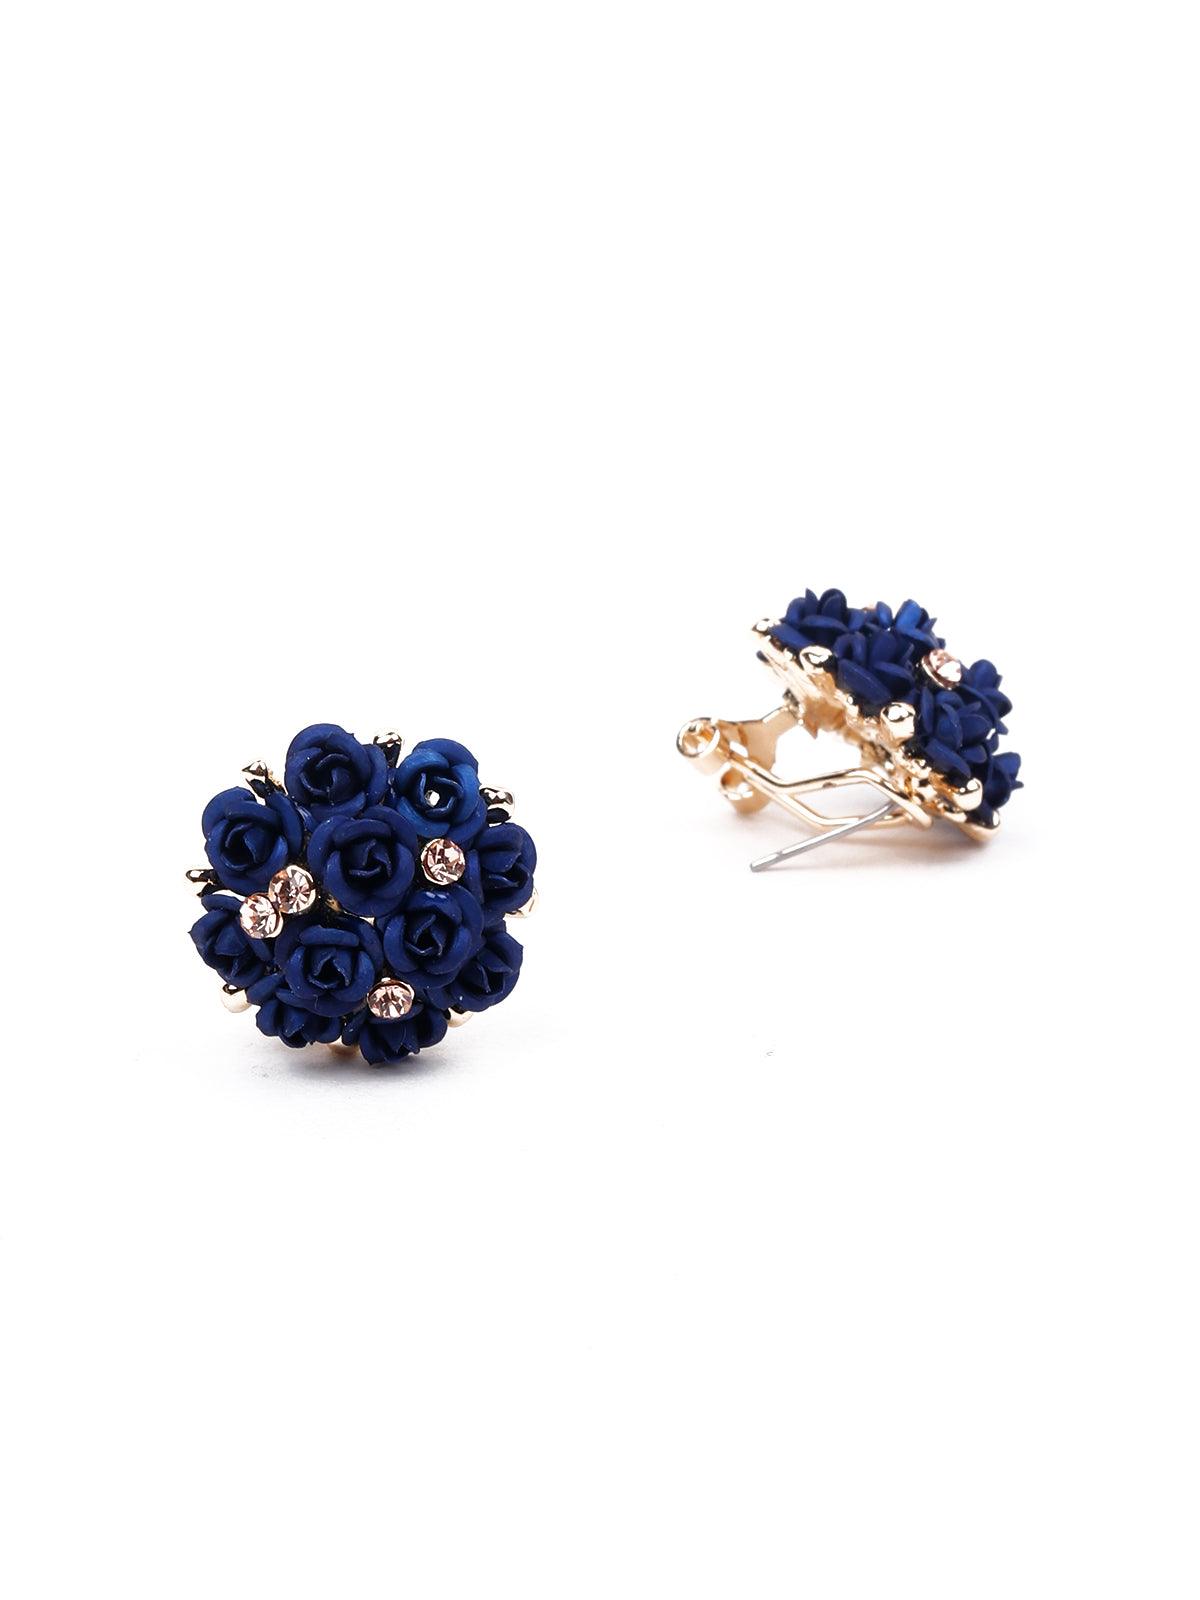 Women's Royal Blue Floral Pendant Necklace Set - Odette